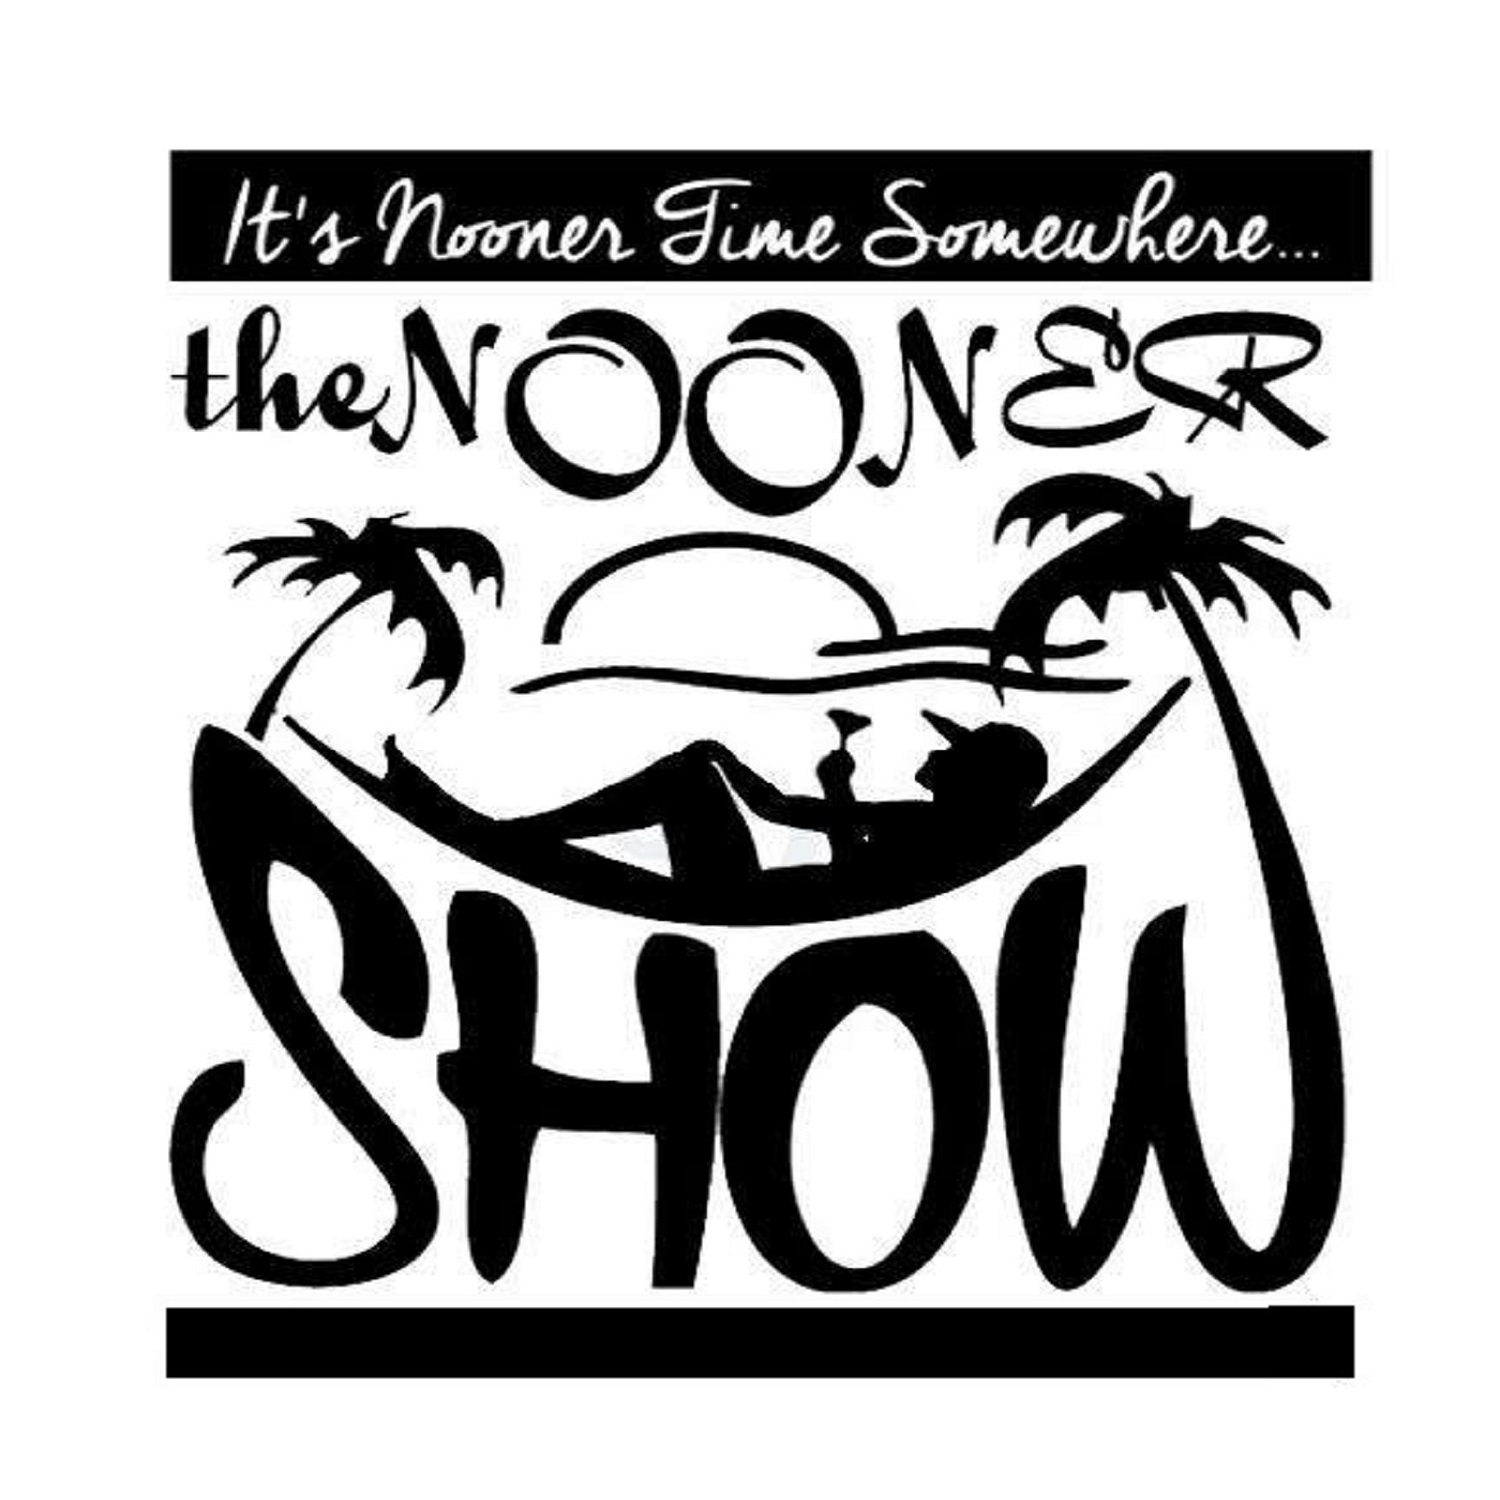 The Nooner Show – Episode 212